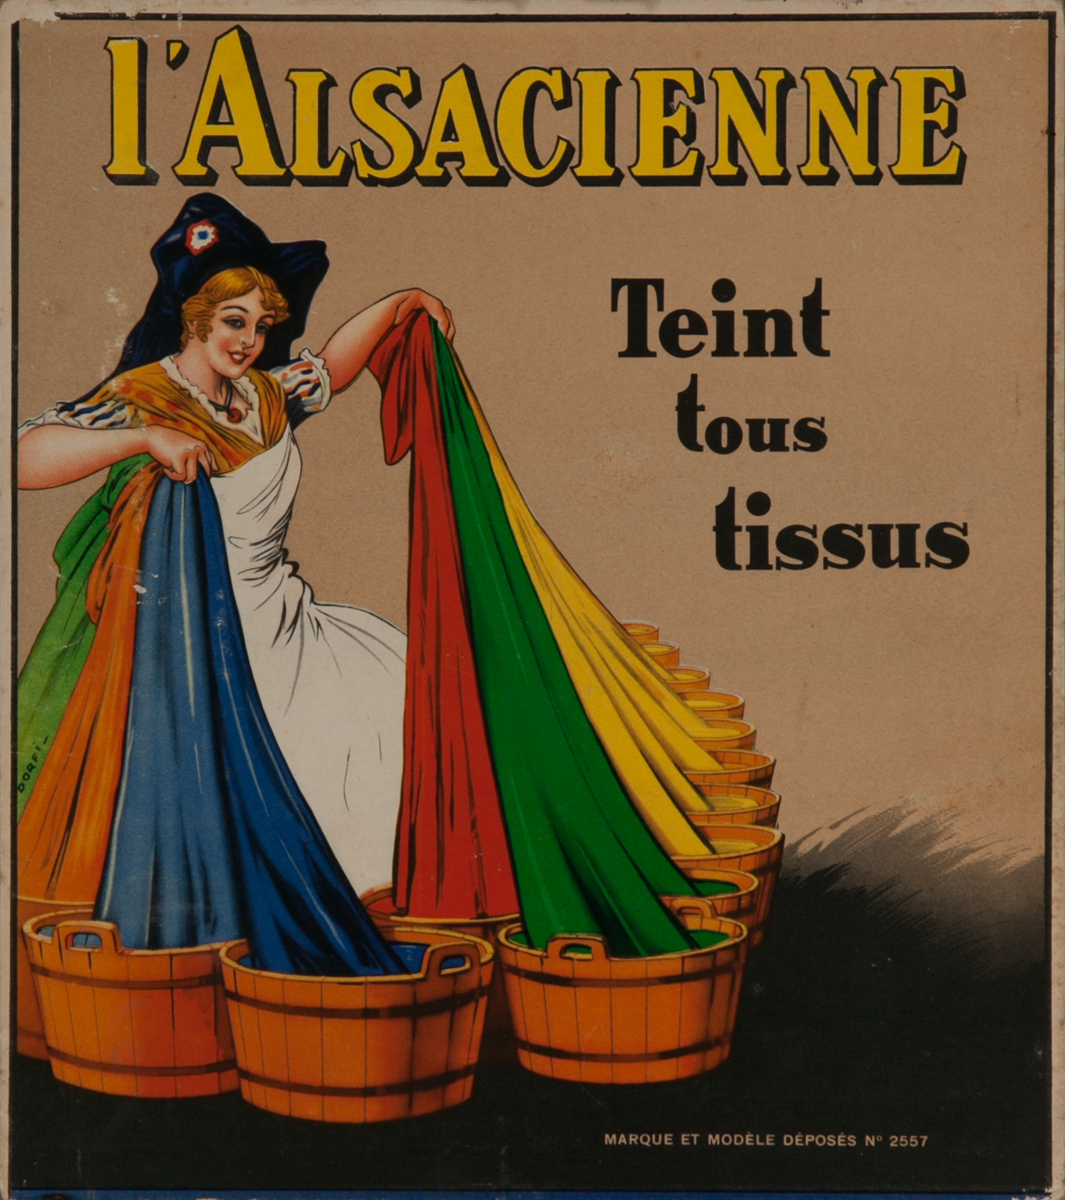 L'Alsacienne Carton Original Vintage Advertising Poster